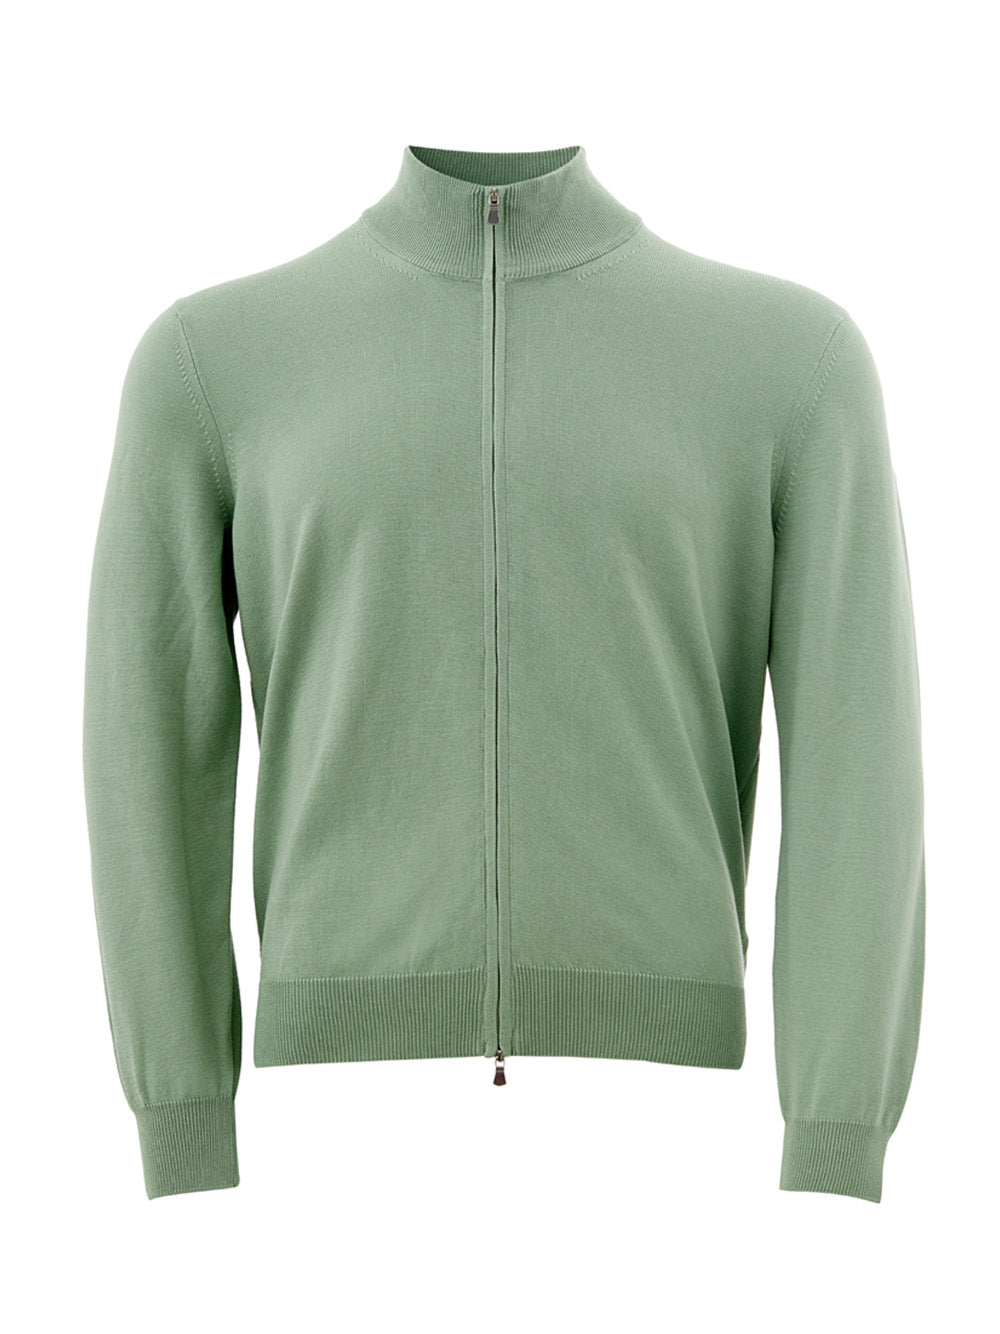 Cotton Full Zip Sweater in Green